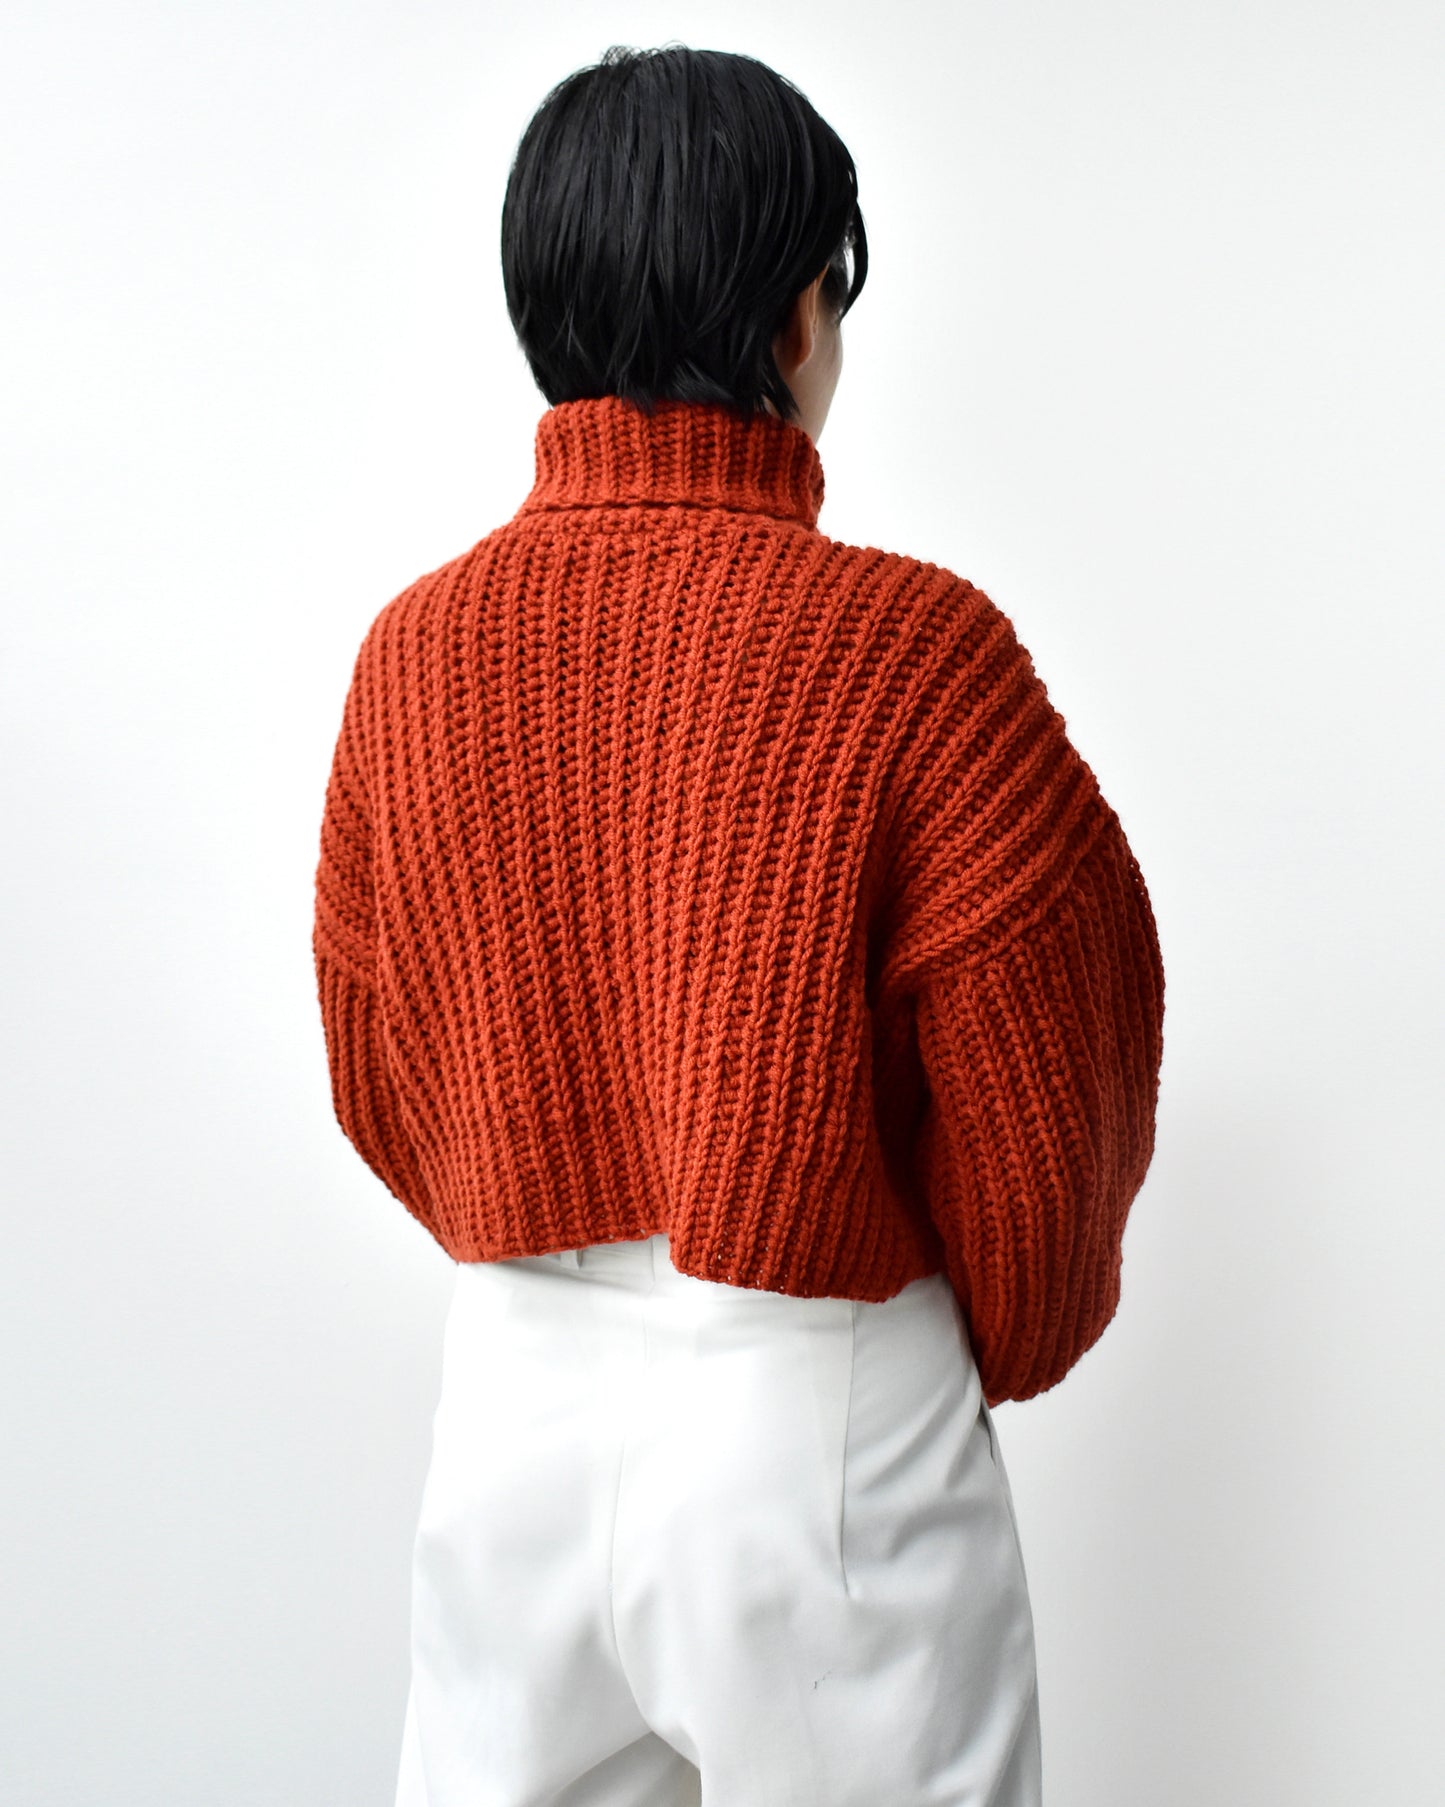 Sweater No.5 | Ribbed sweater crochet pattern